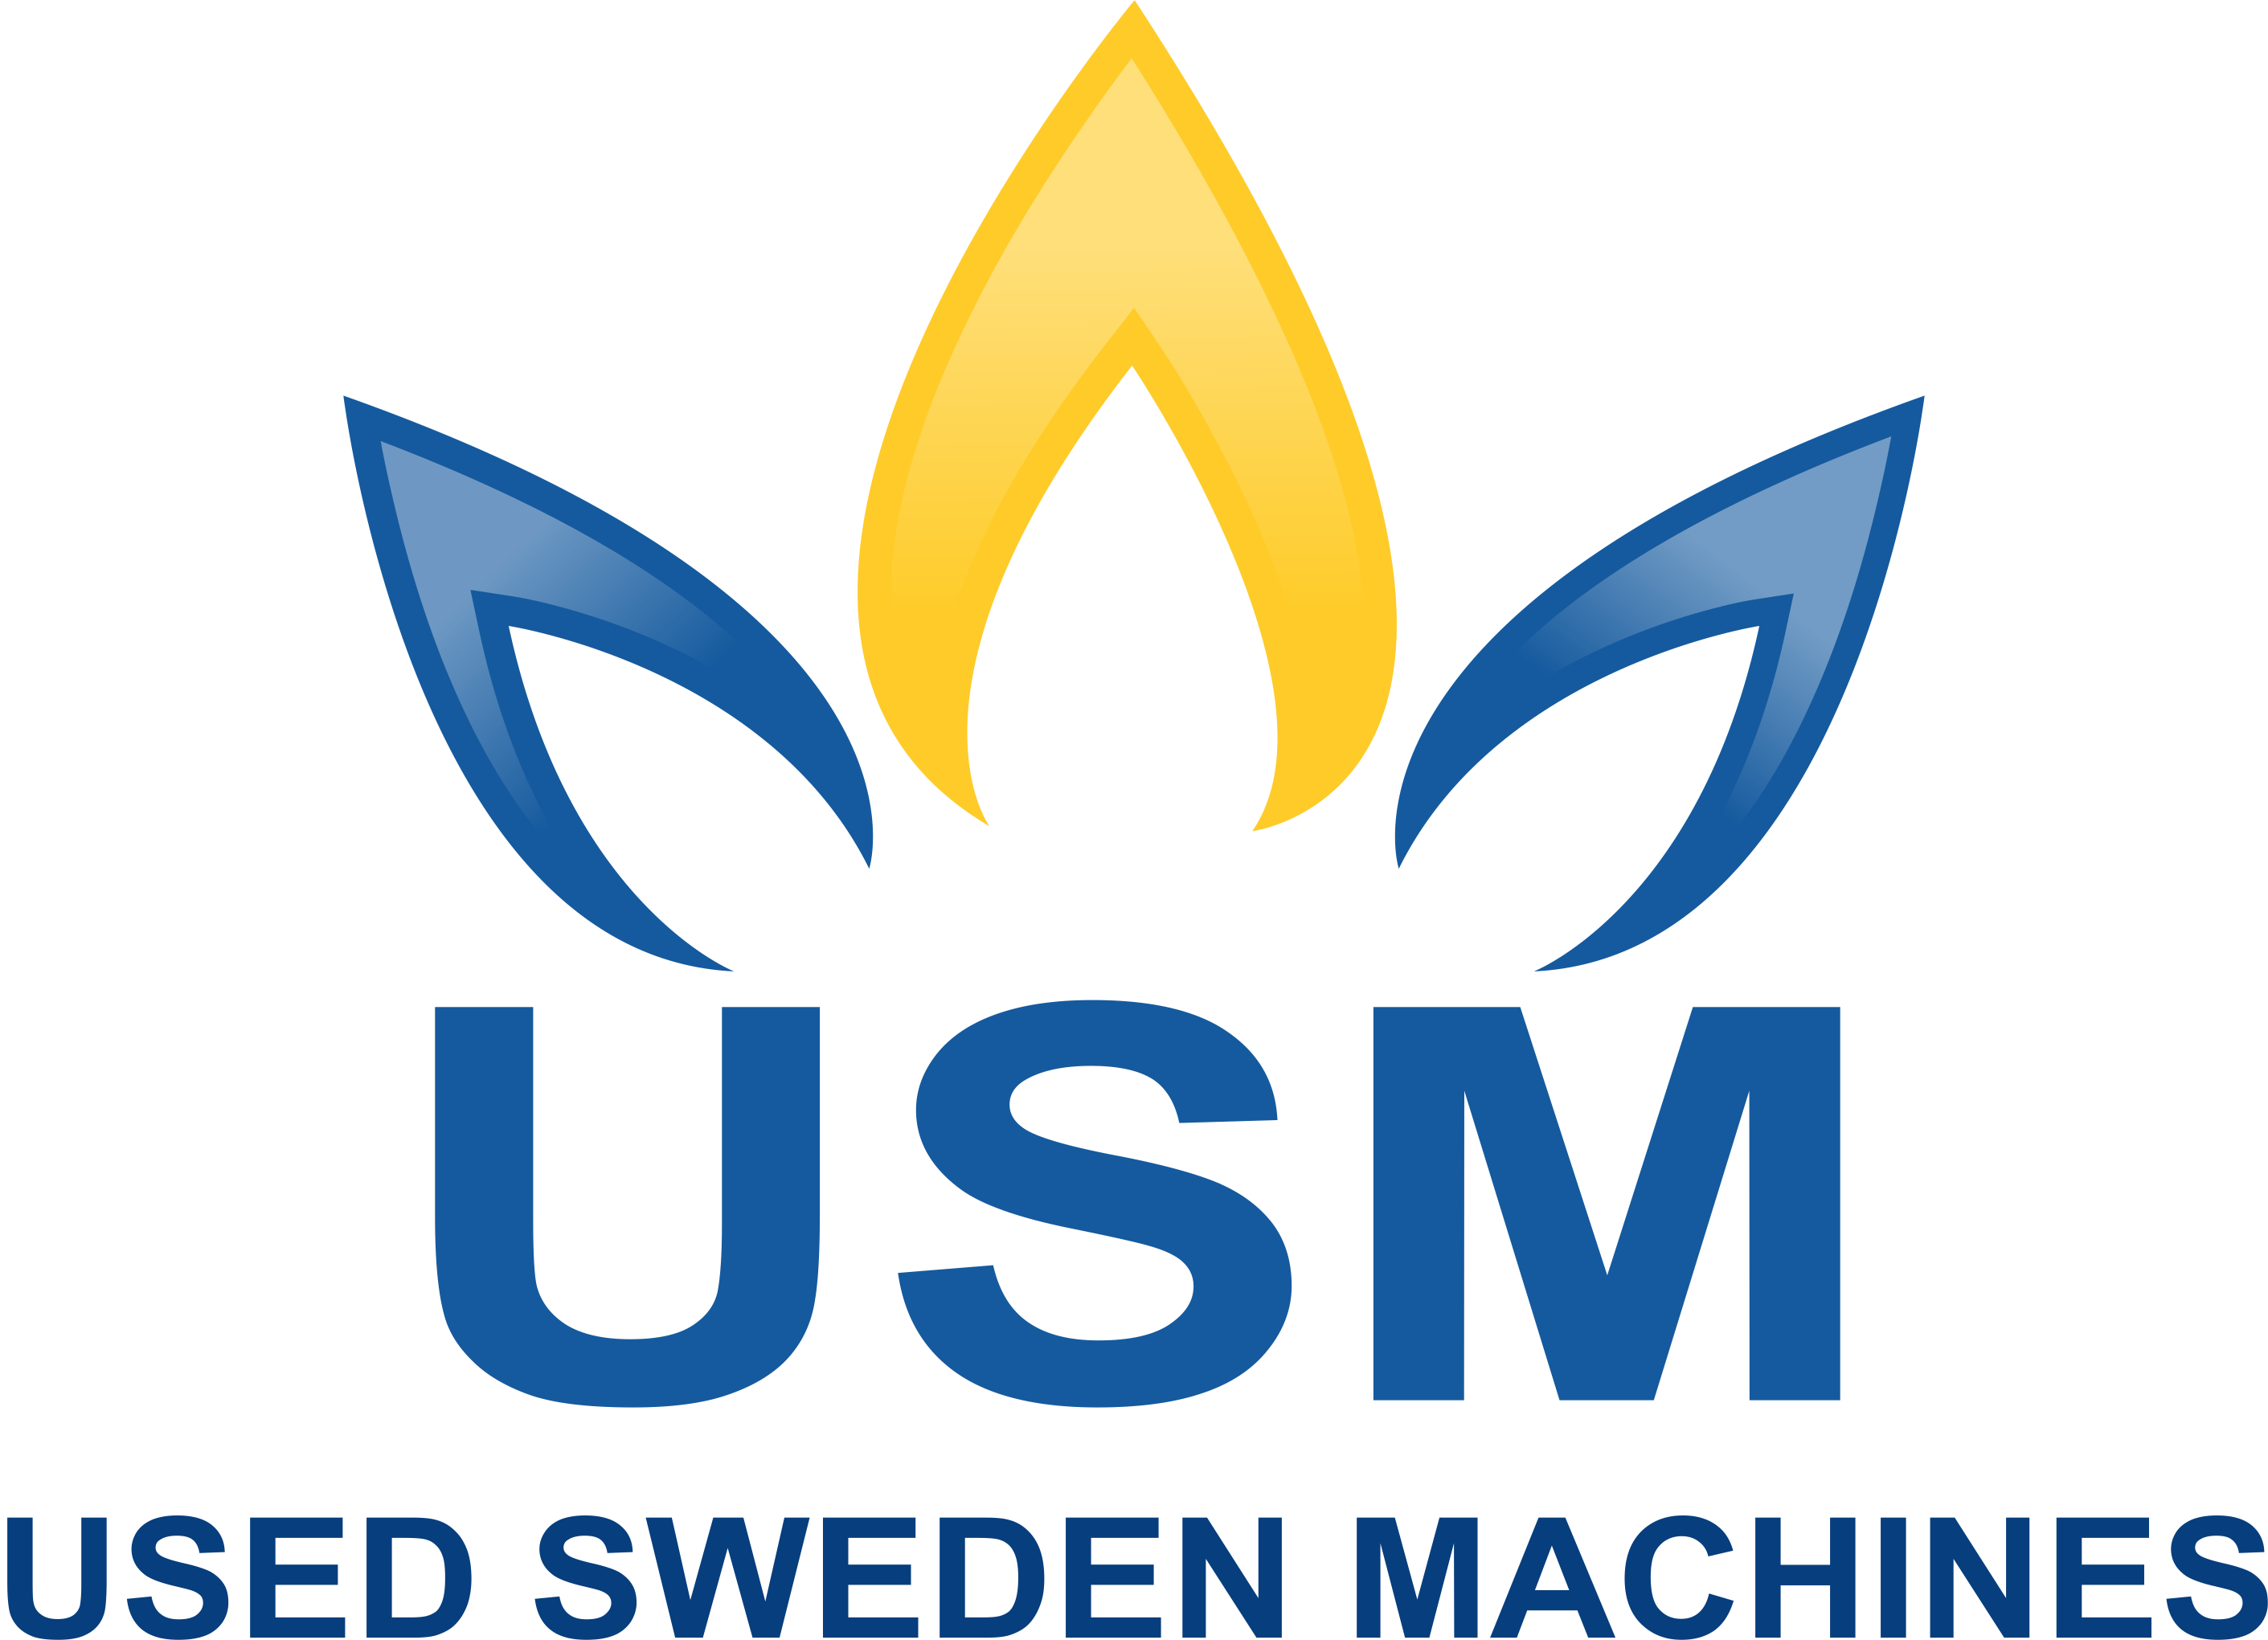 USED SWEDEN MACHINES